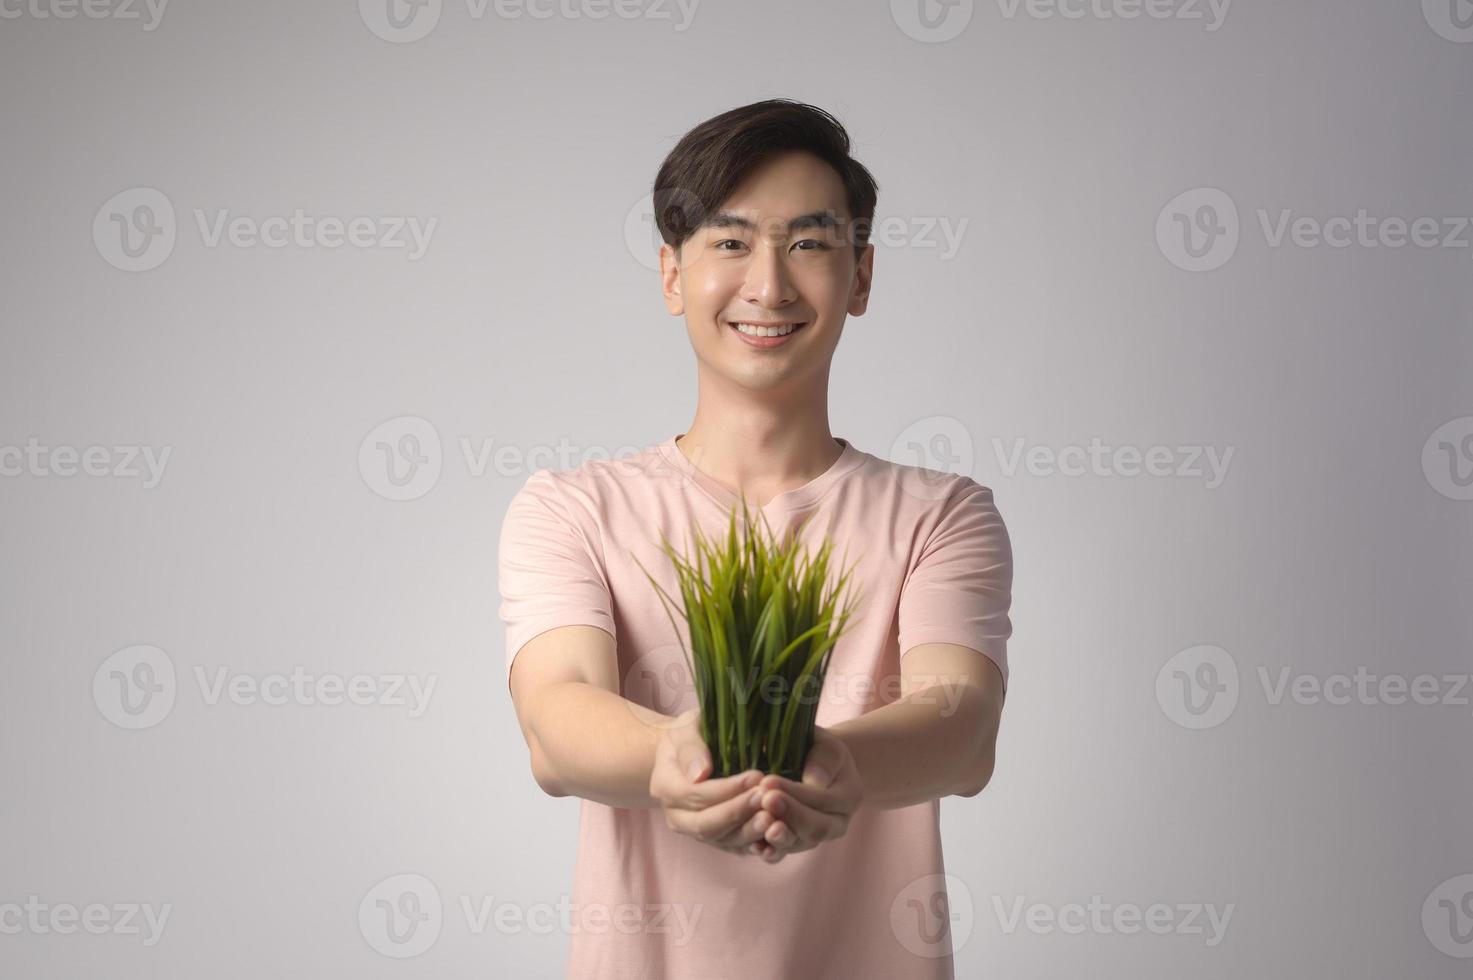 jonge lachende man met boom over witte achtergrond studio, save earth concept foto